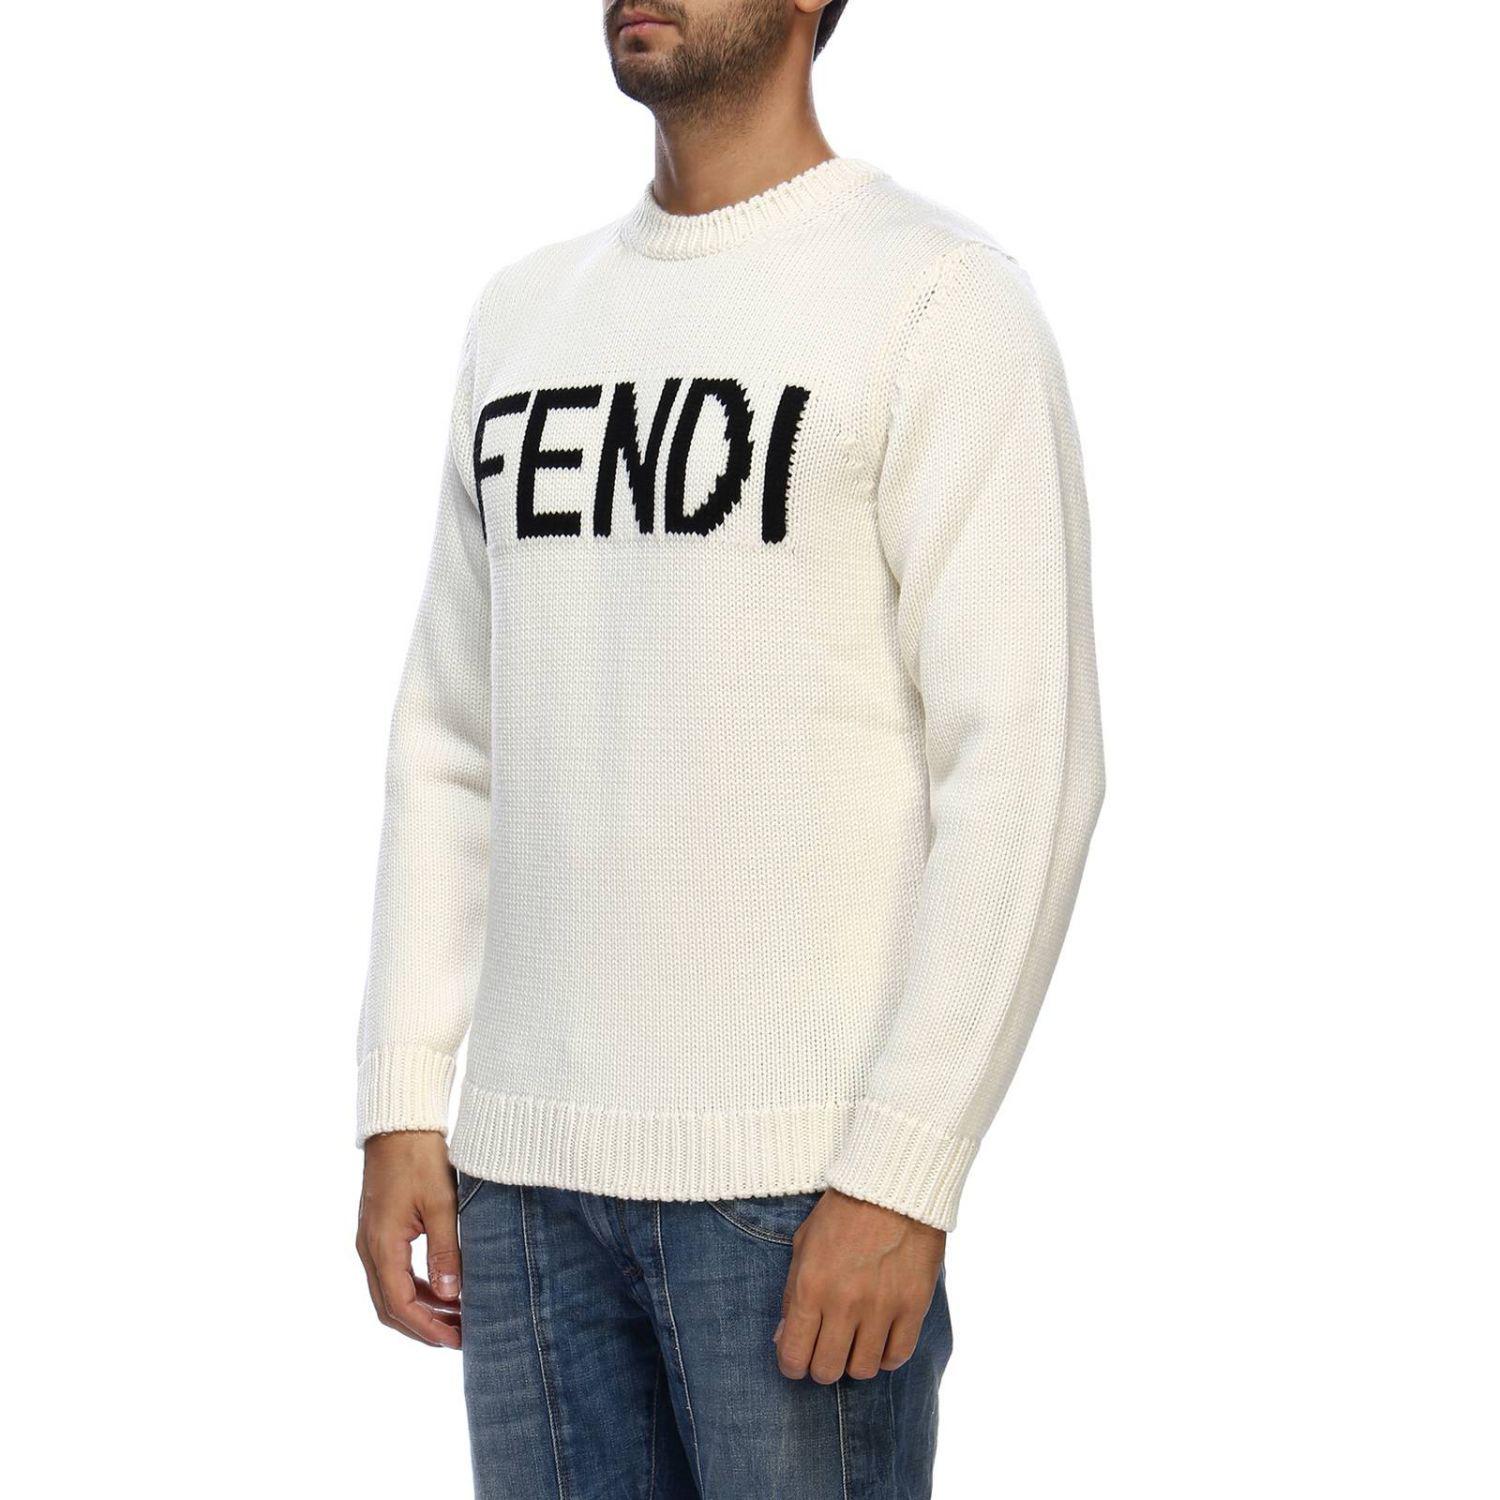 fendi men's pullover